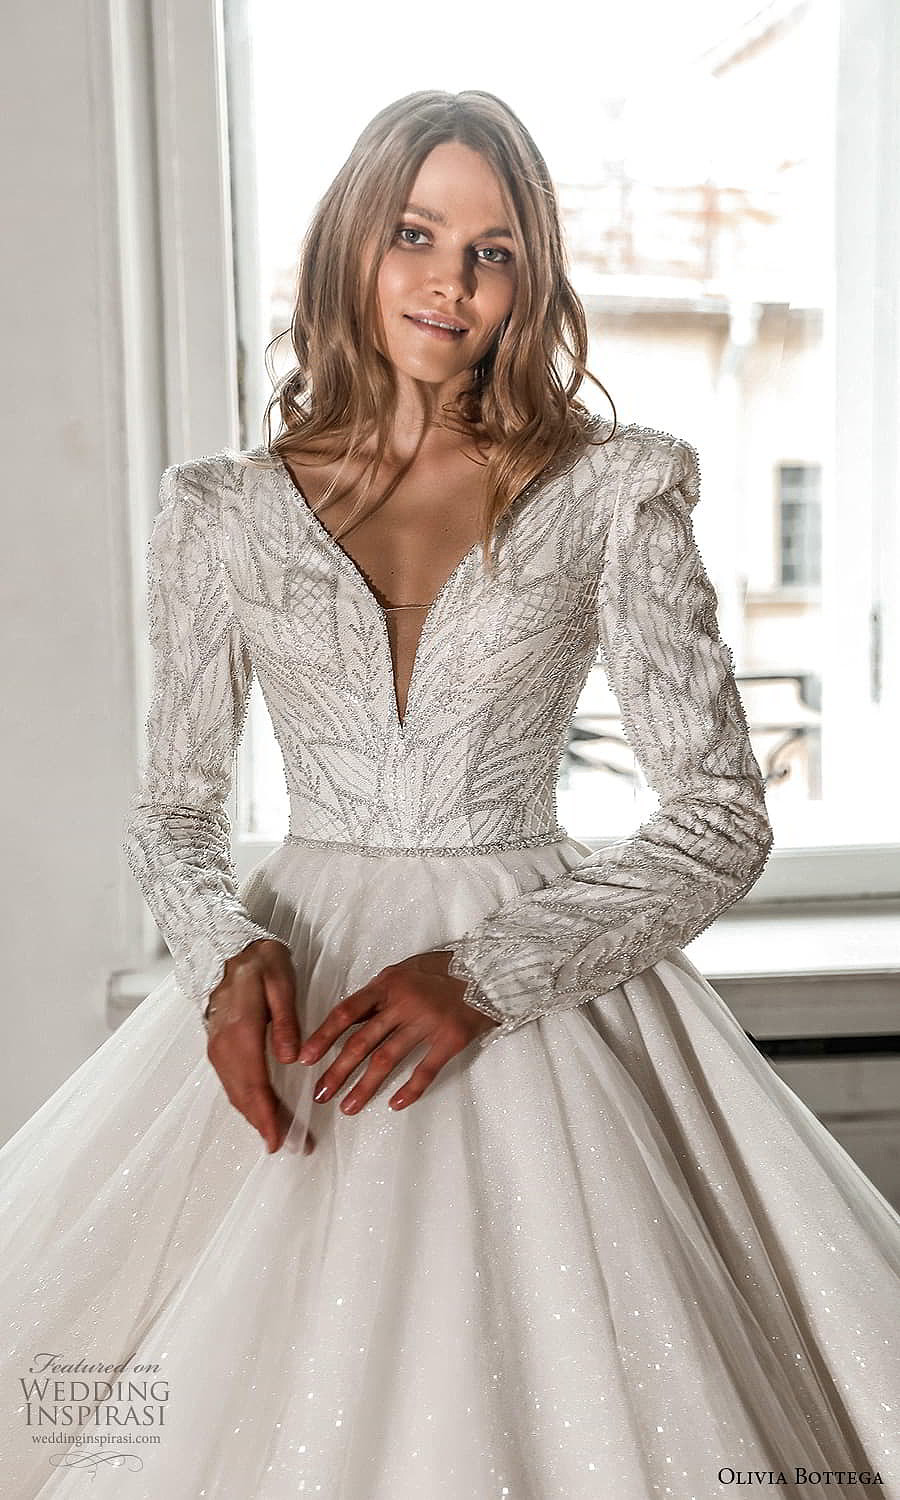 Olivia Bottega Pret-a-Porter 新娘系列 优雅百搭新娘嫁衣 - 40